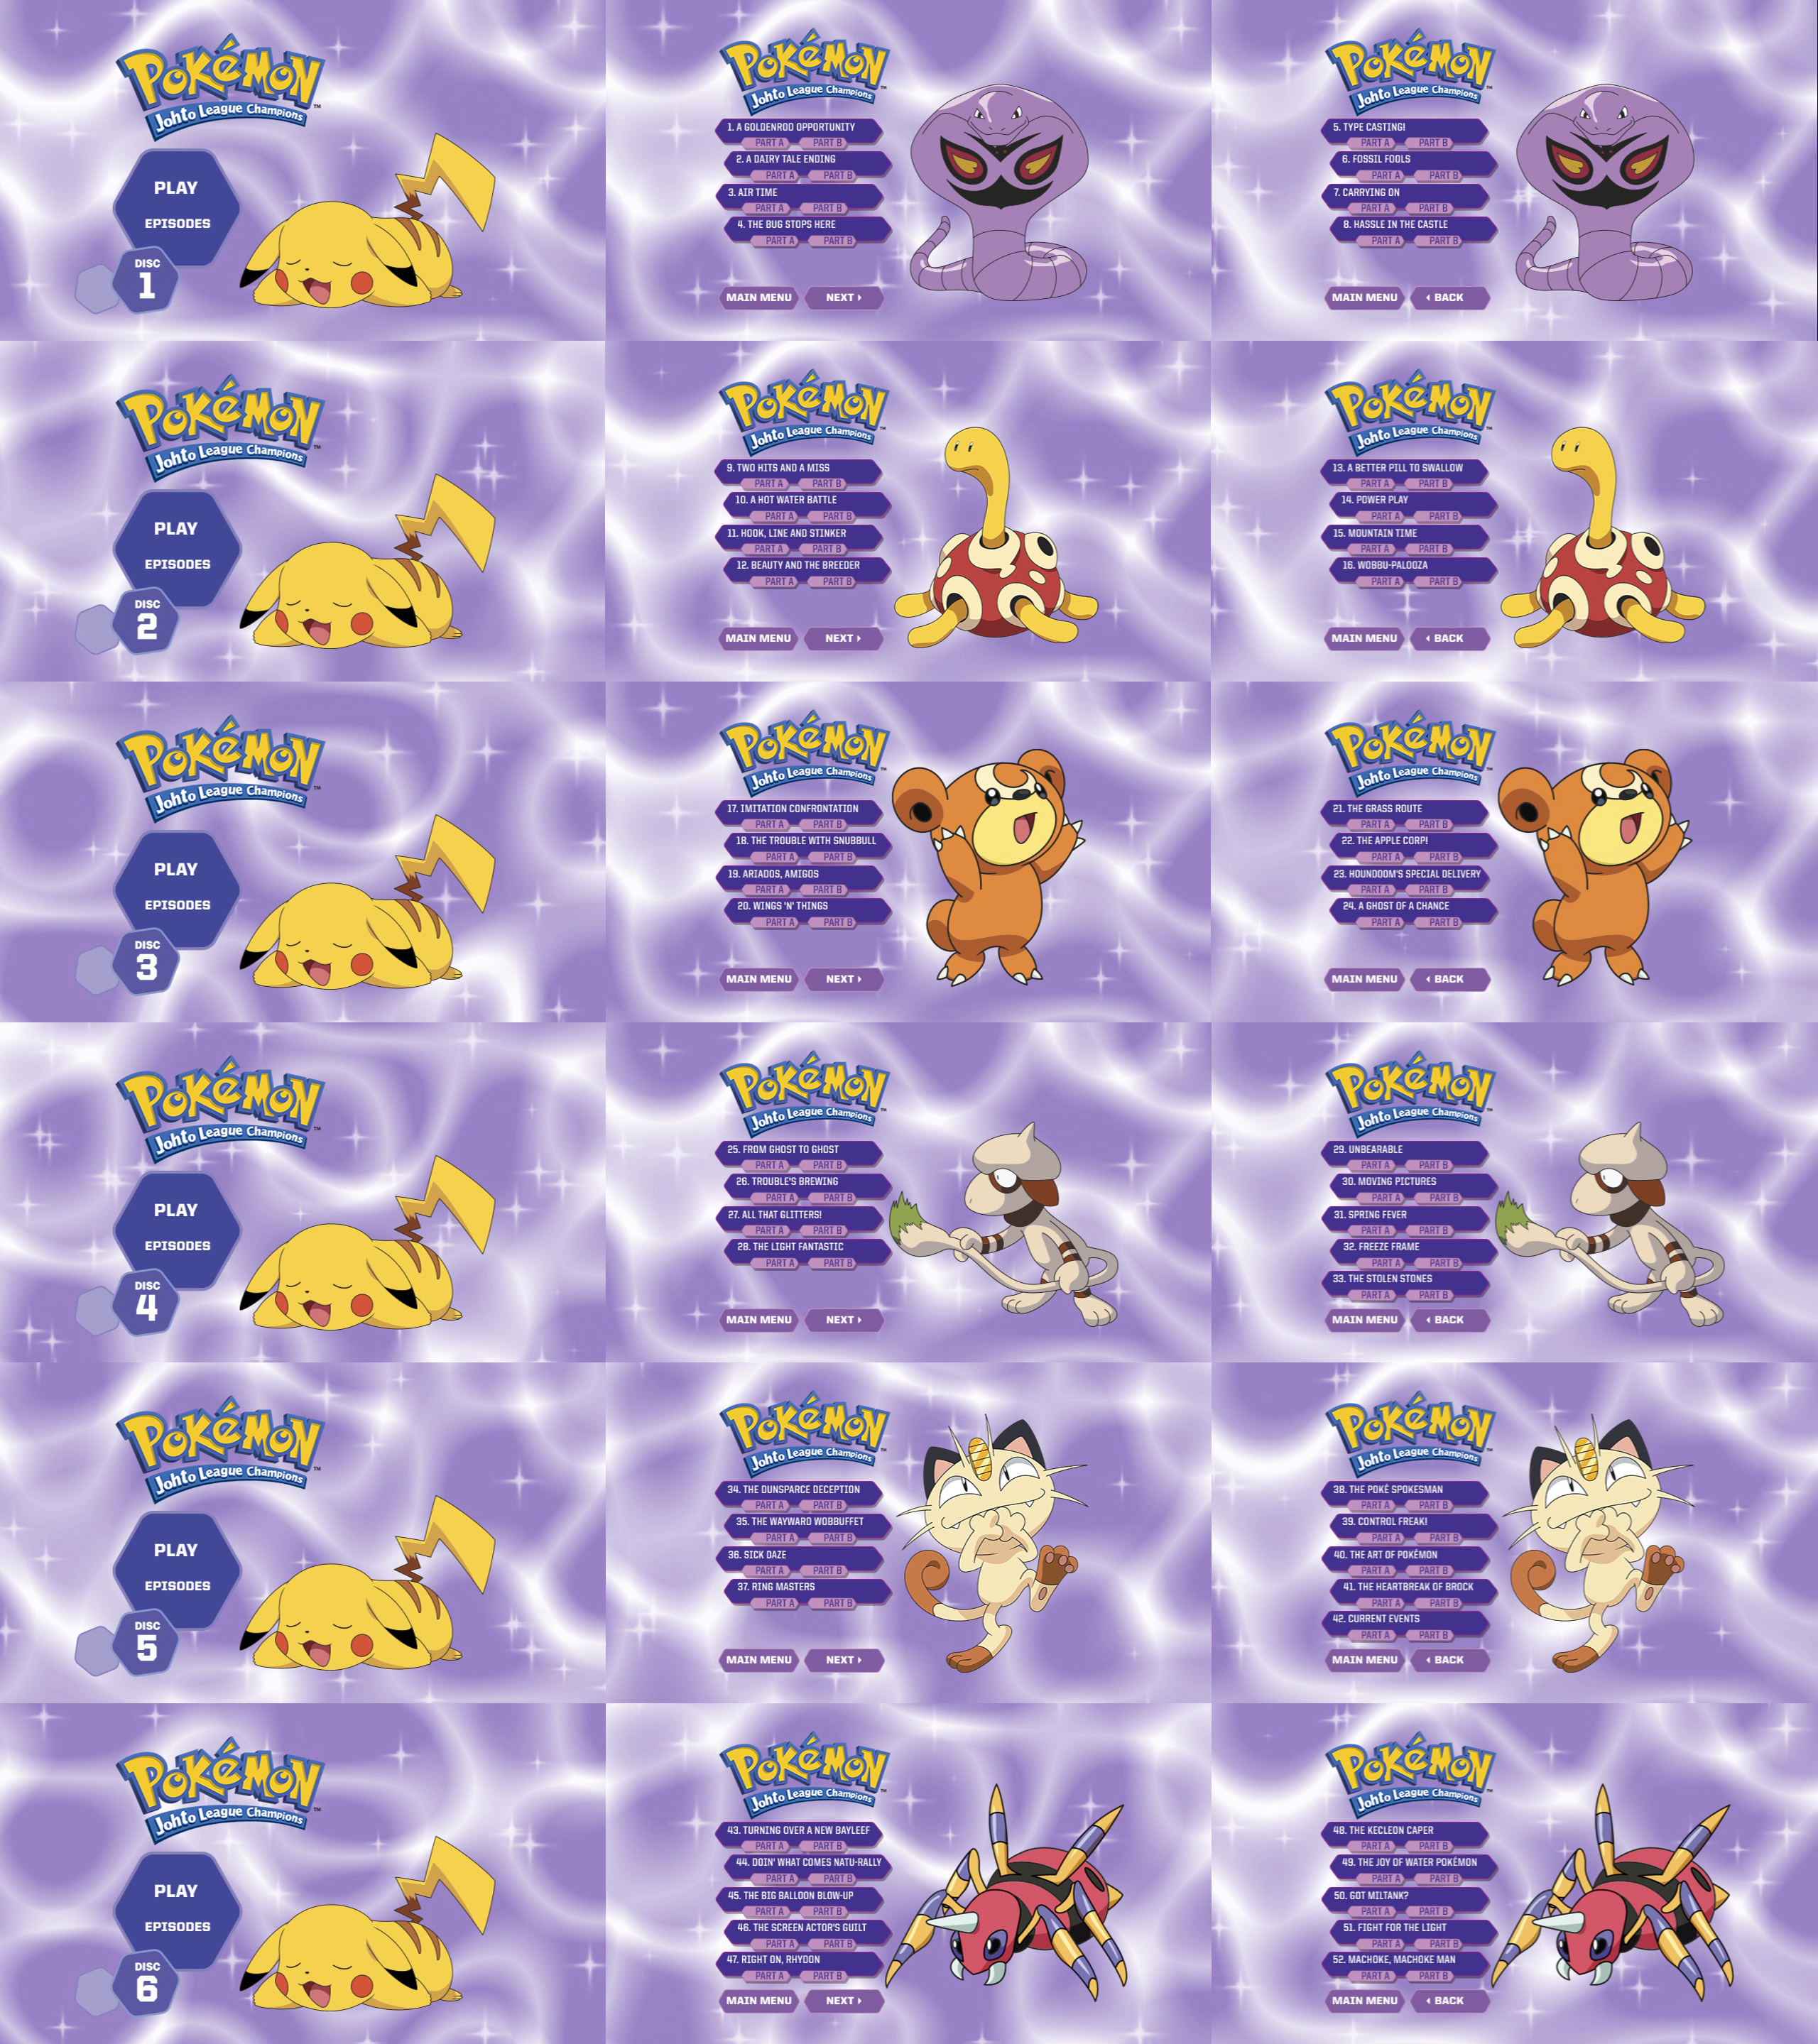 Pokemon Johto League Champions Folder Icon by RagnaRook82 on DeviantArt